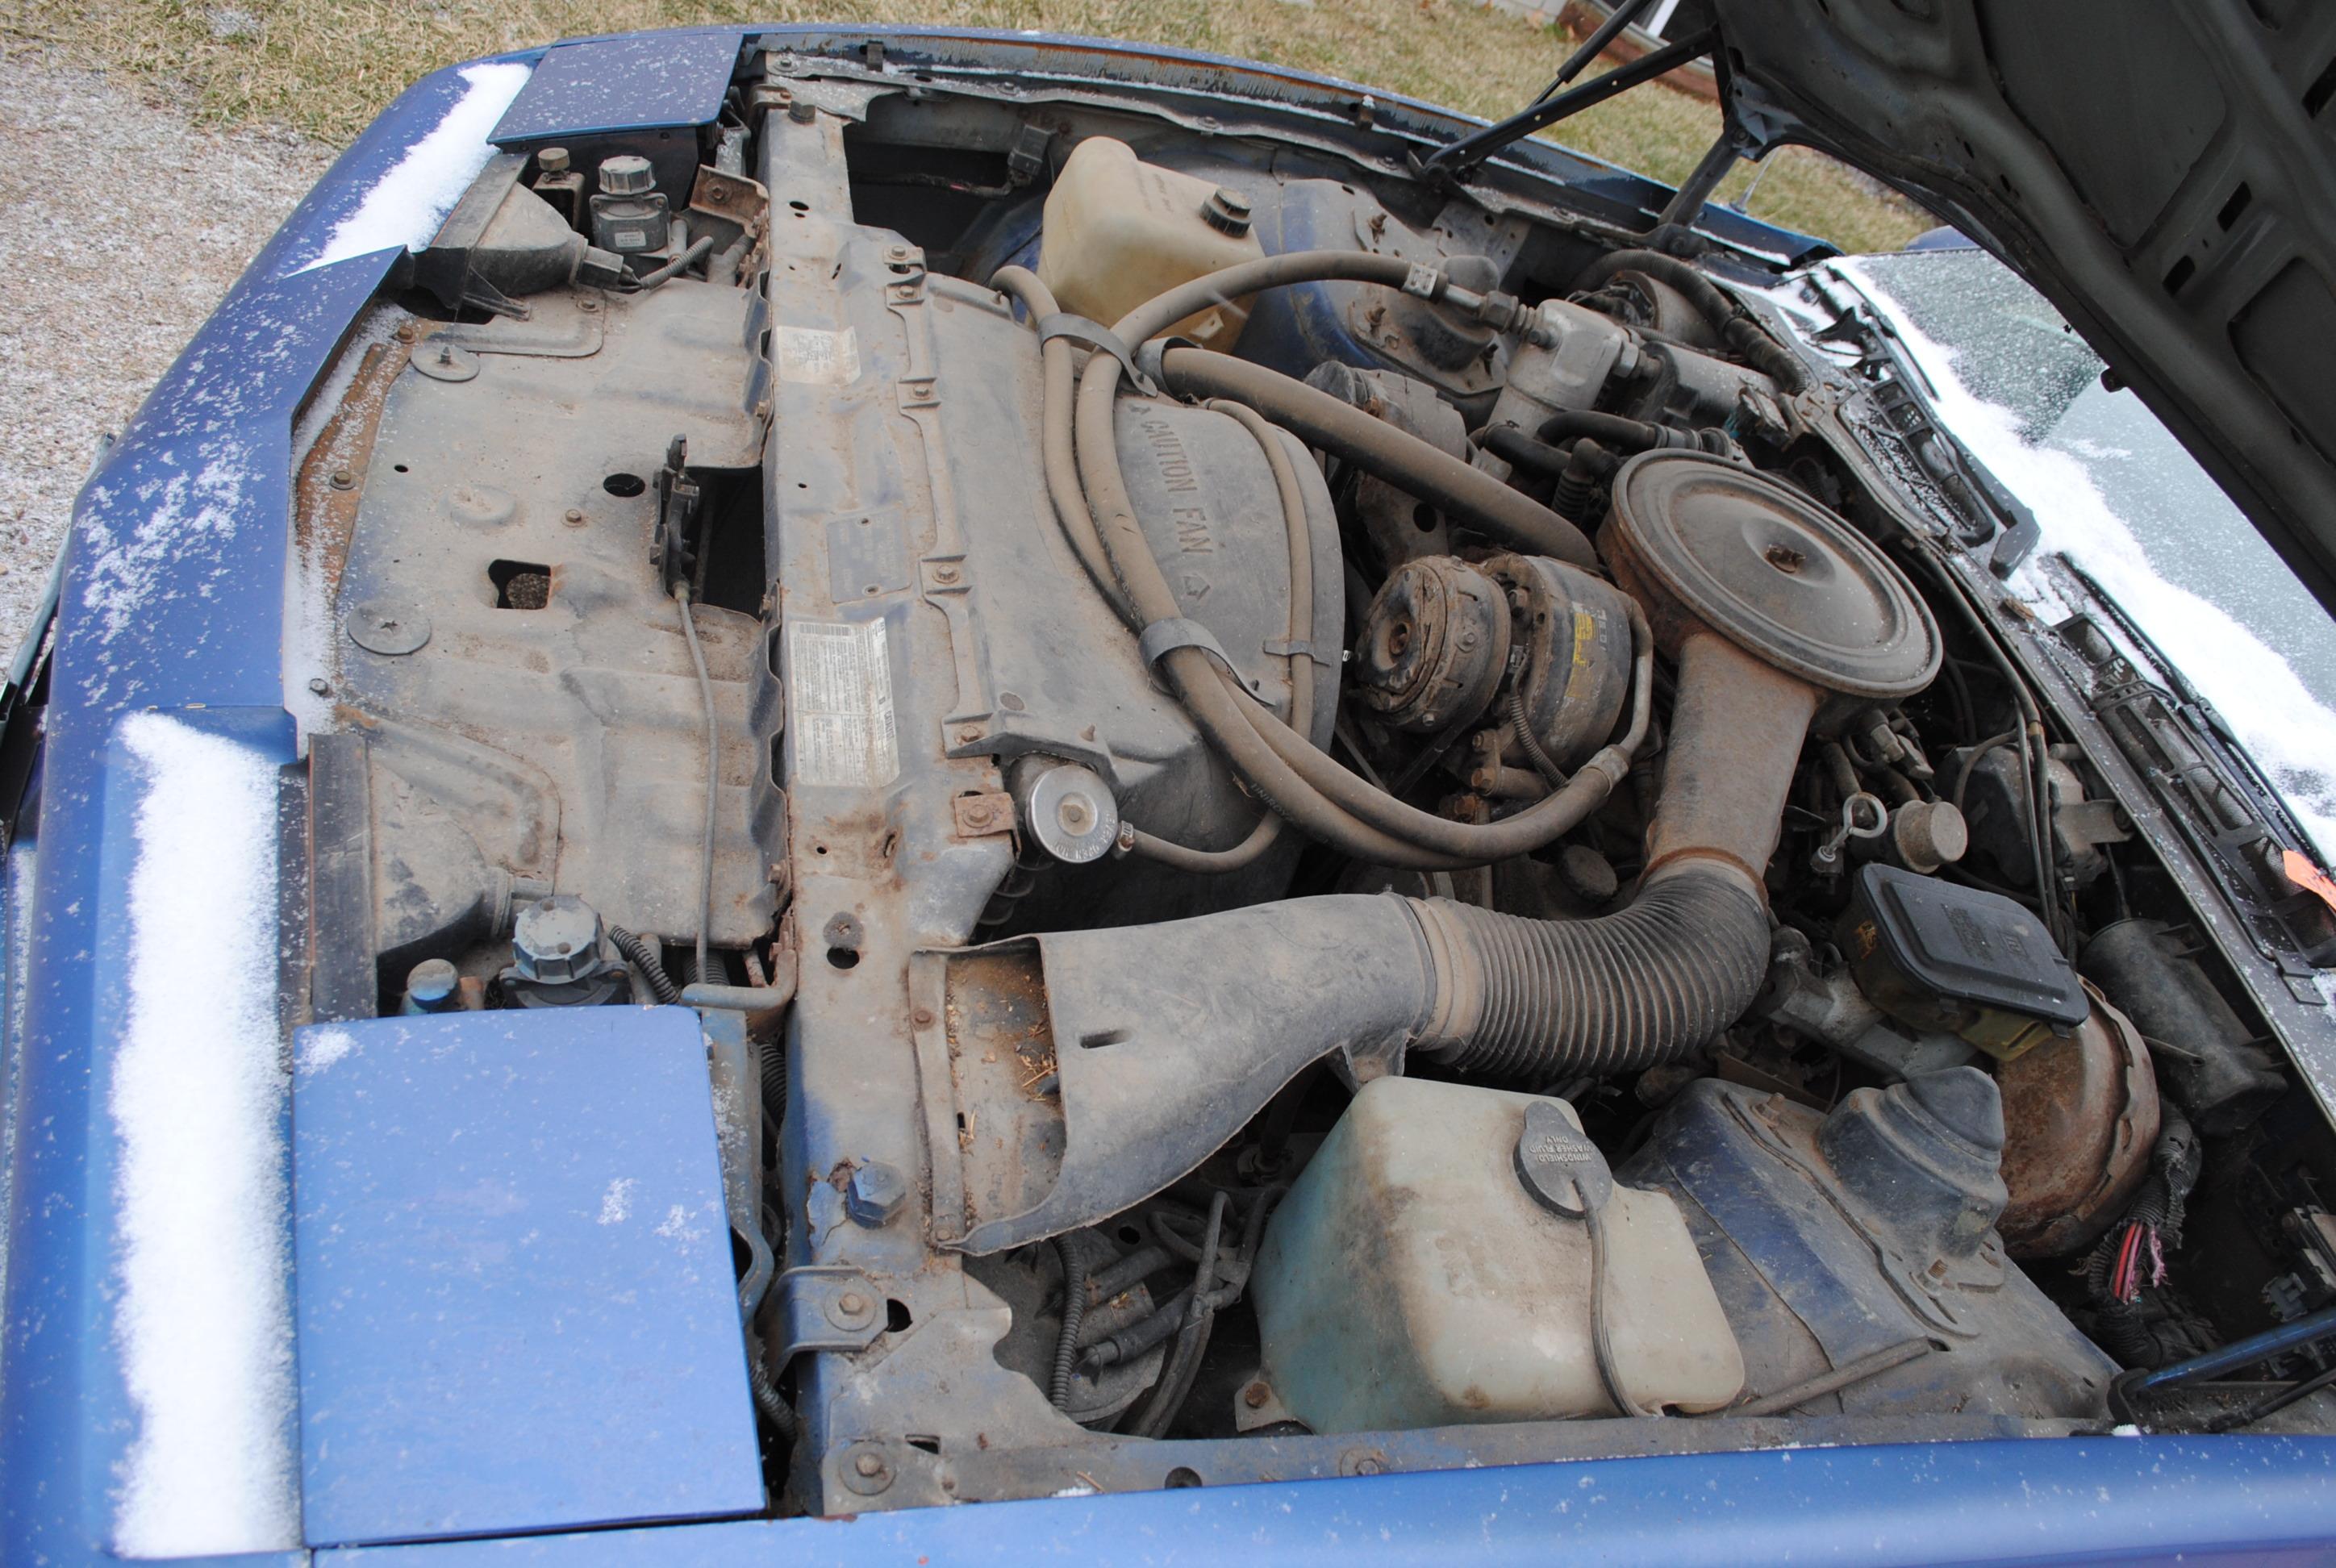 1984 Pontiac Firebird, project car, needs engine, engine is stuck, wiring harness is ba under the ho